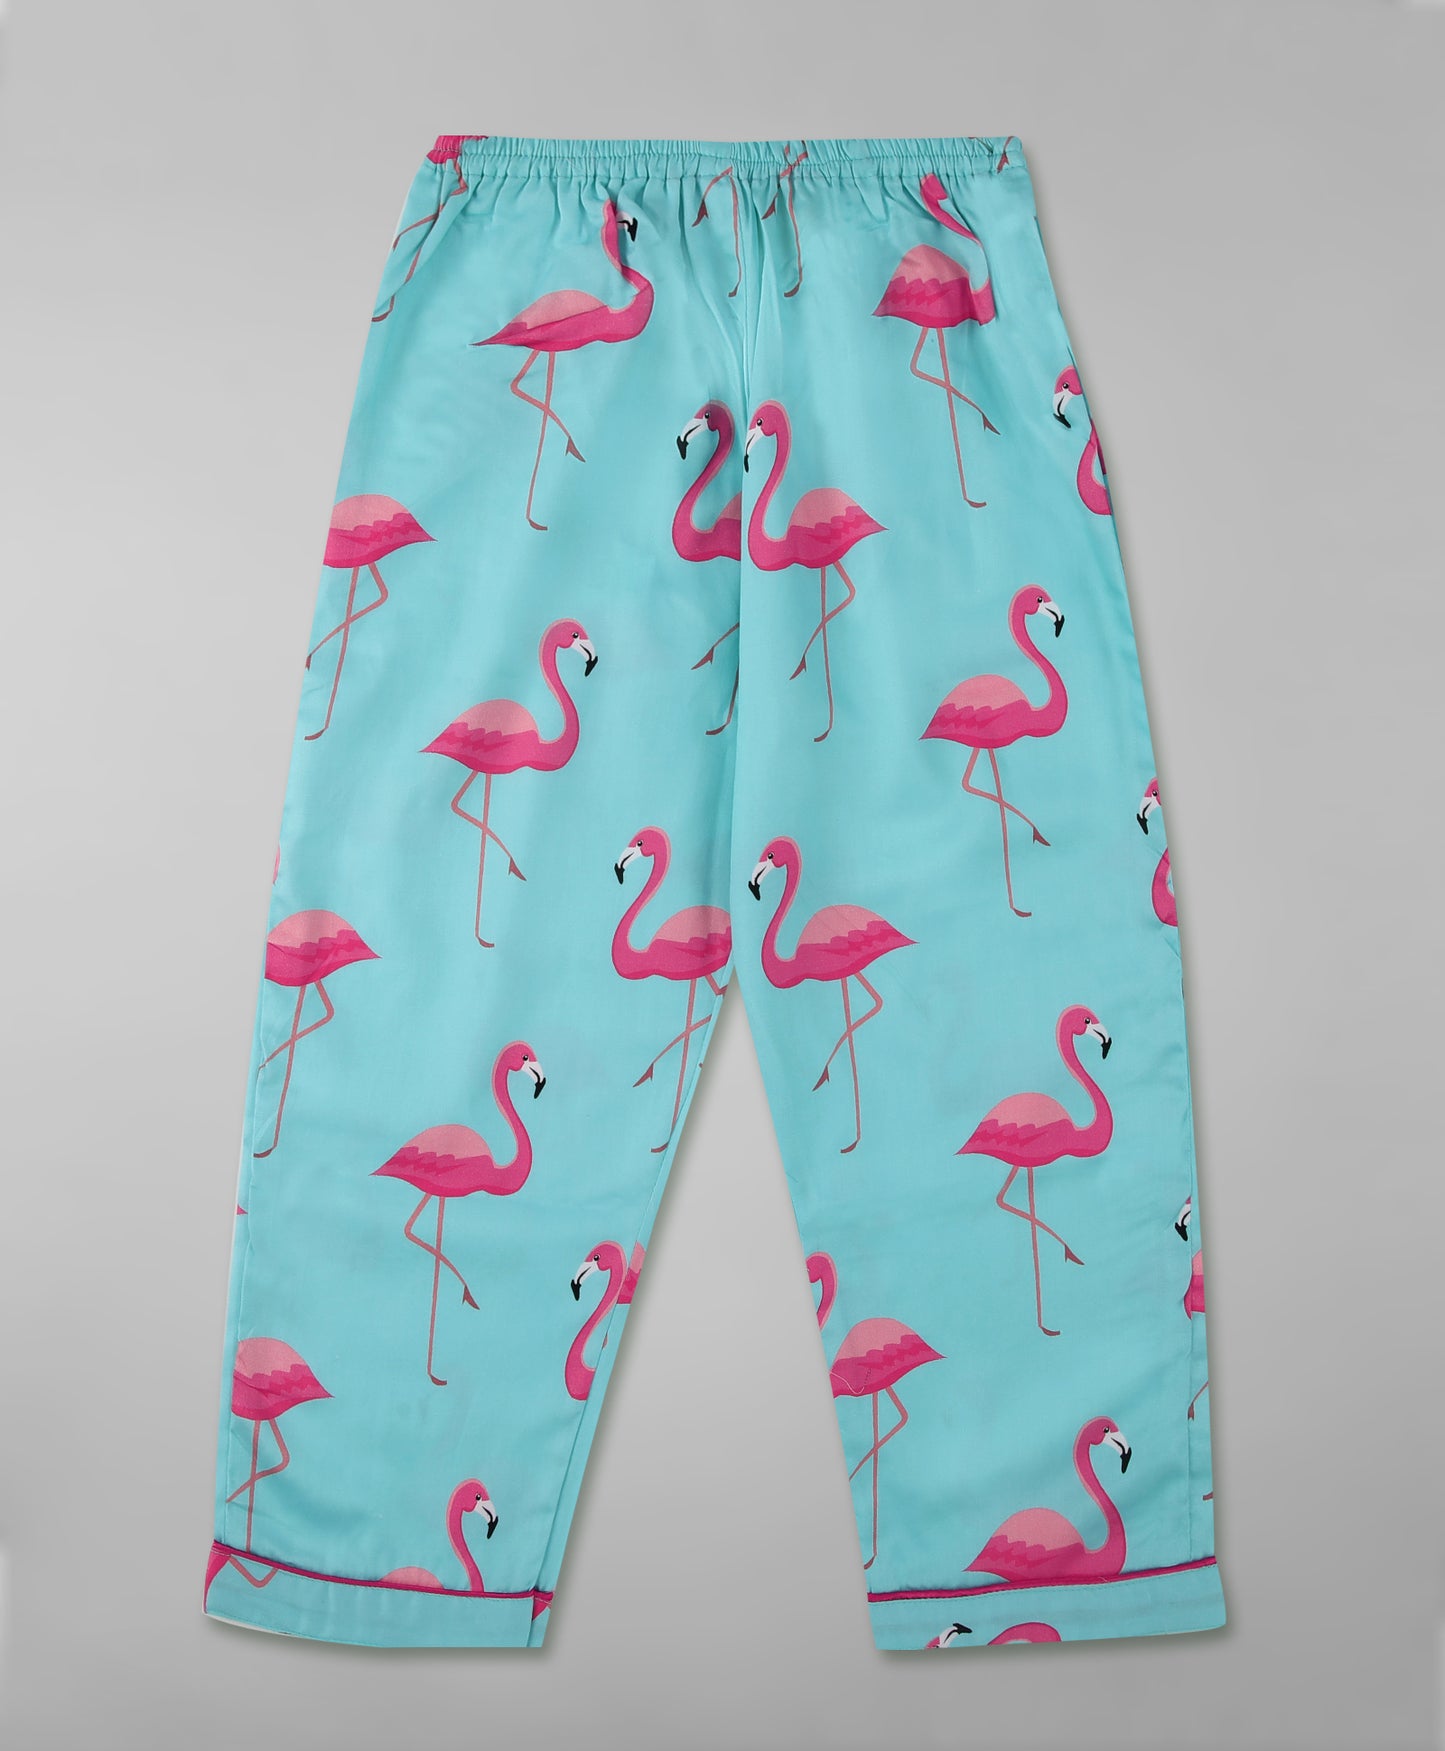 Pink Flamingo Kids Button Down Pj Set - Pure Cotton Pj Set with Notched Collar